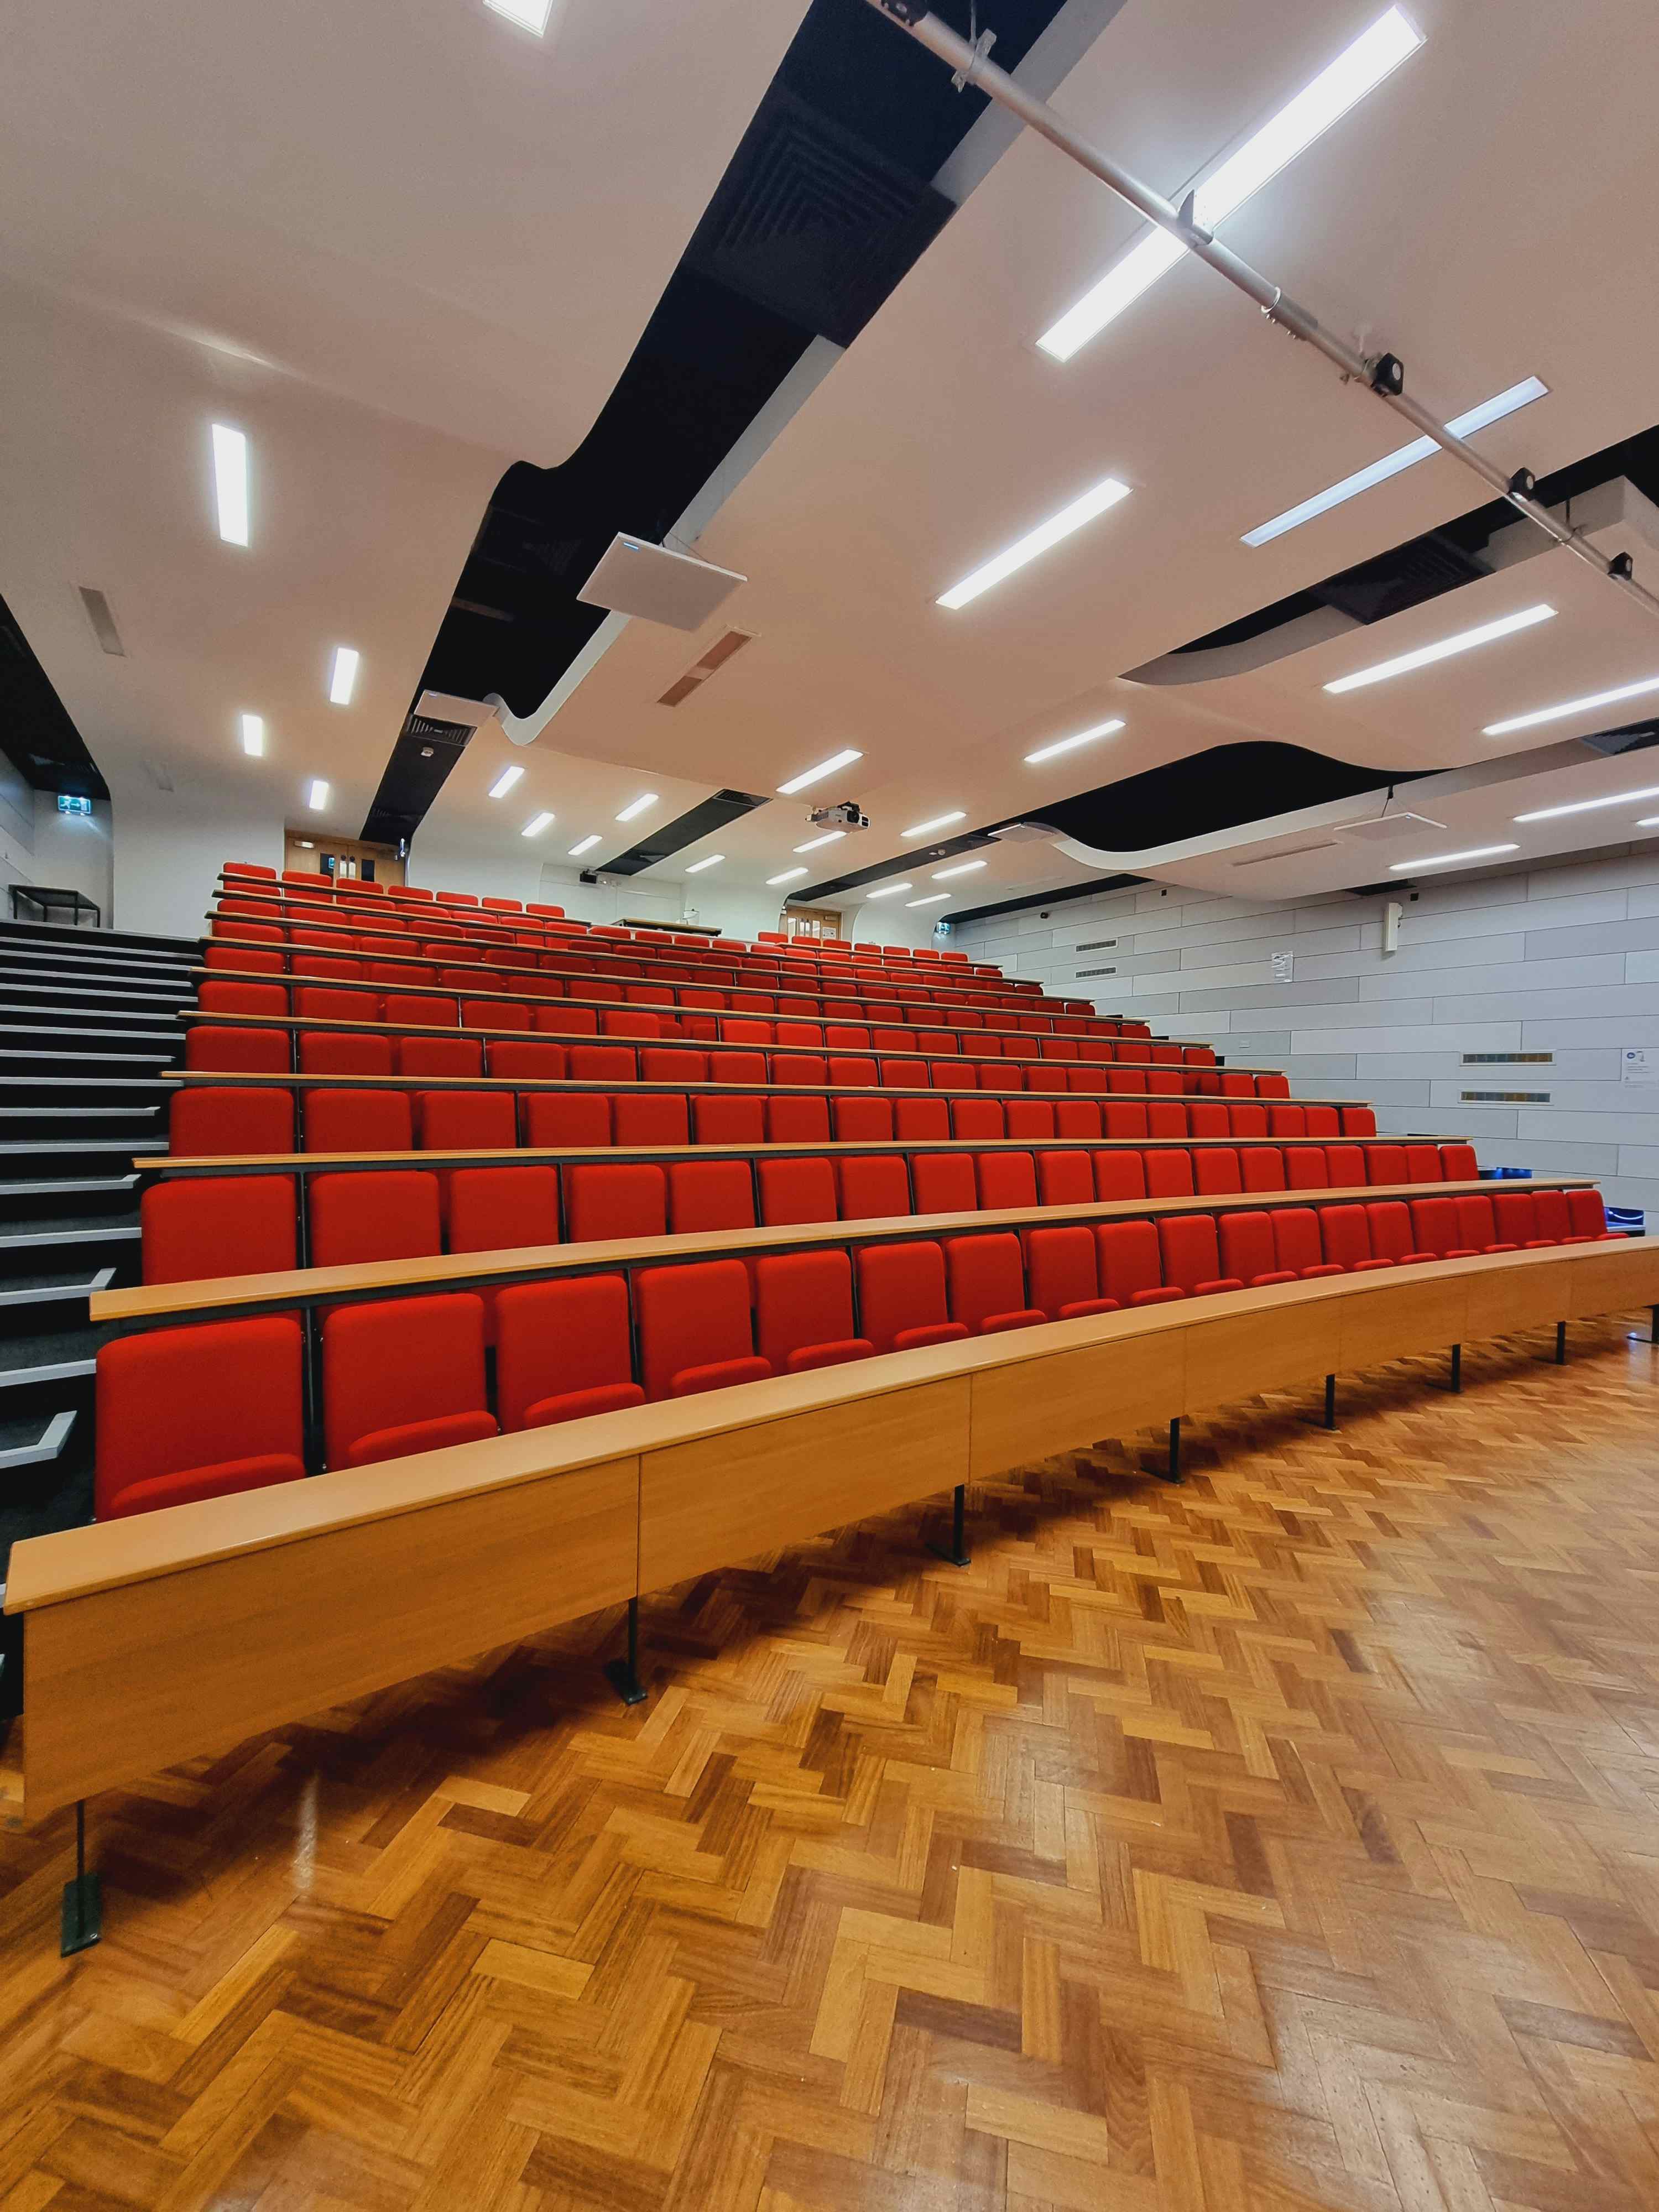 Sturge 111 Lecture Theatre , Newman University - Birmingham